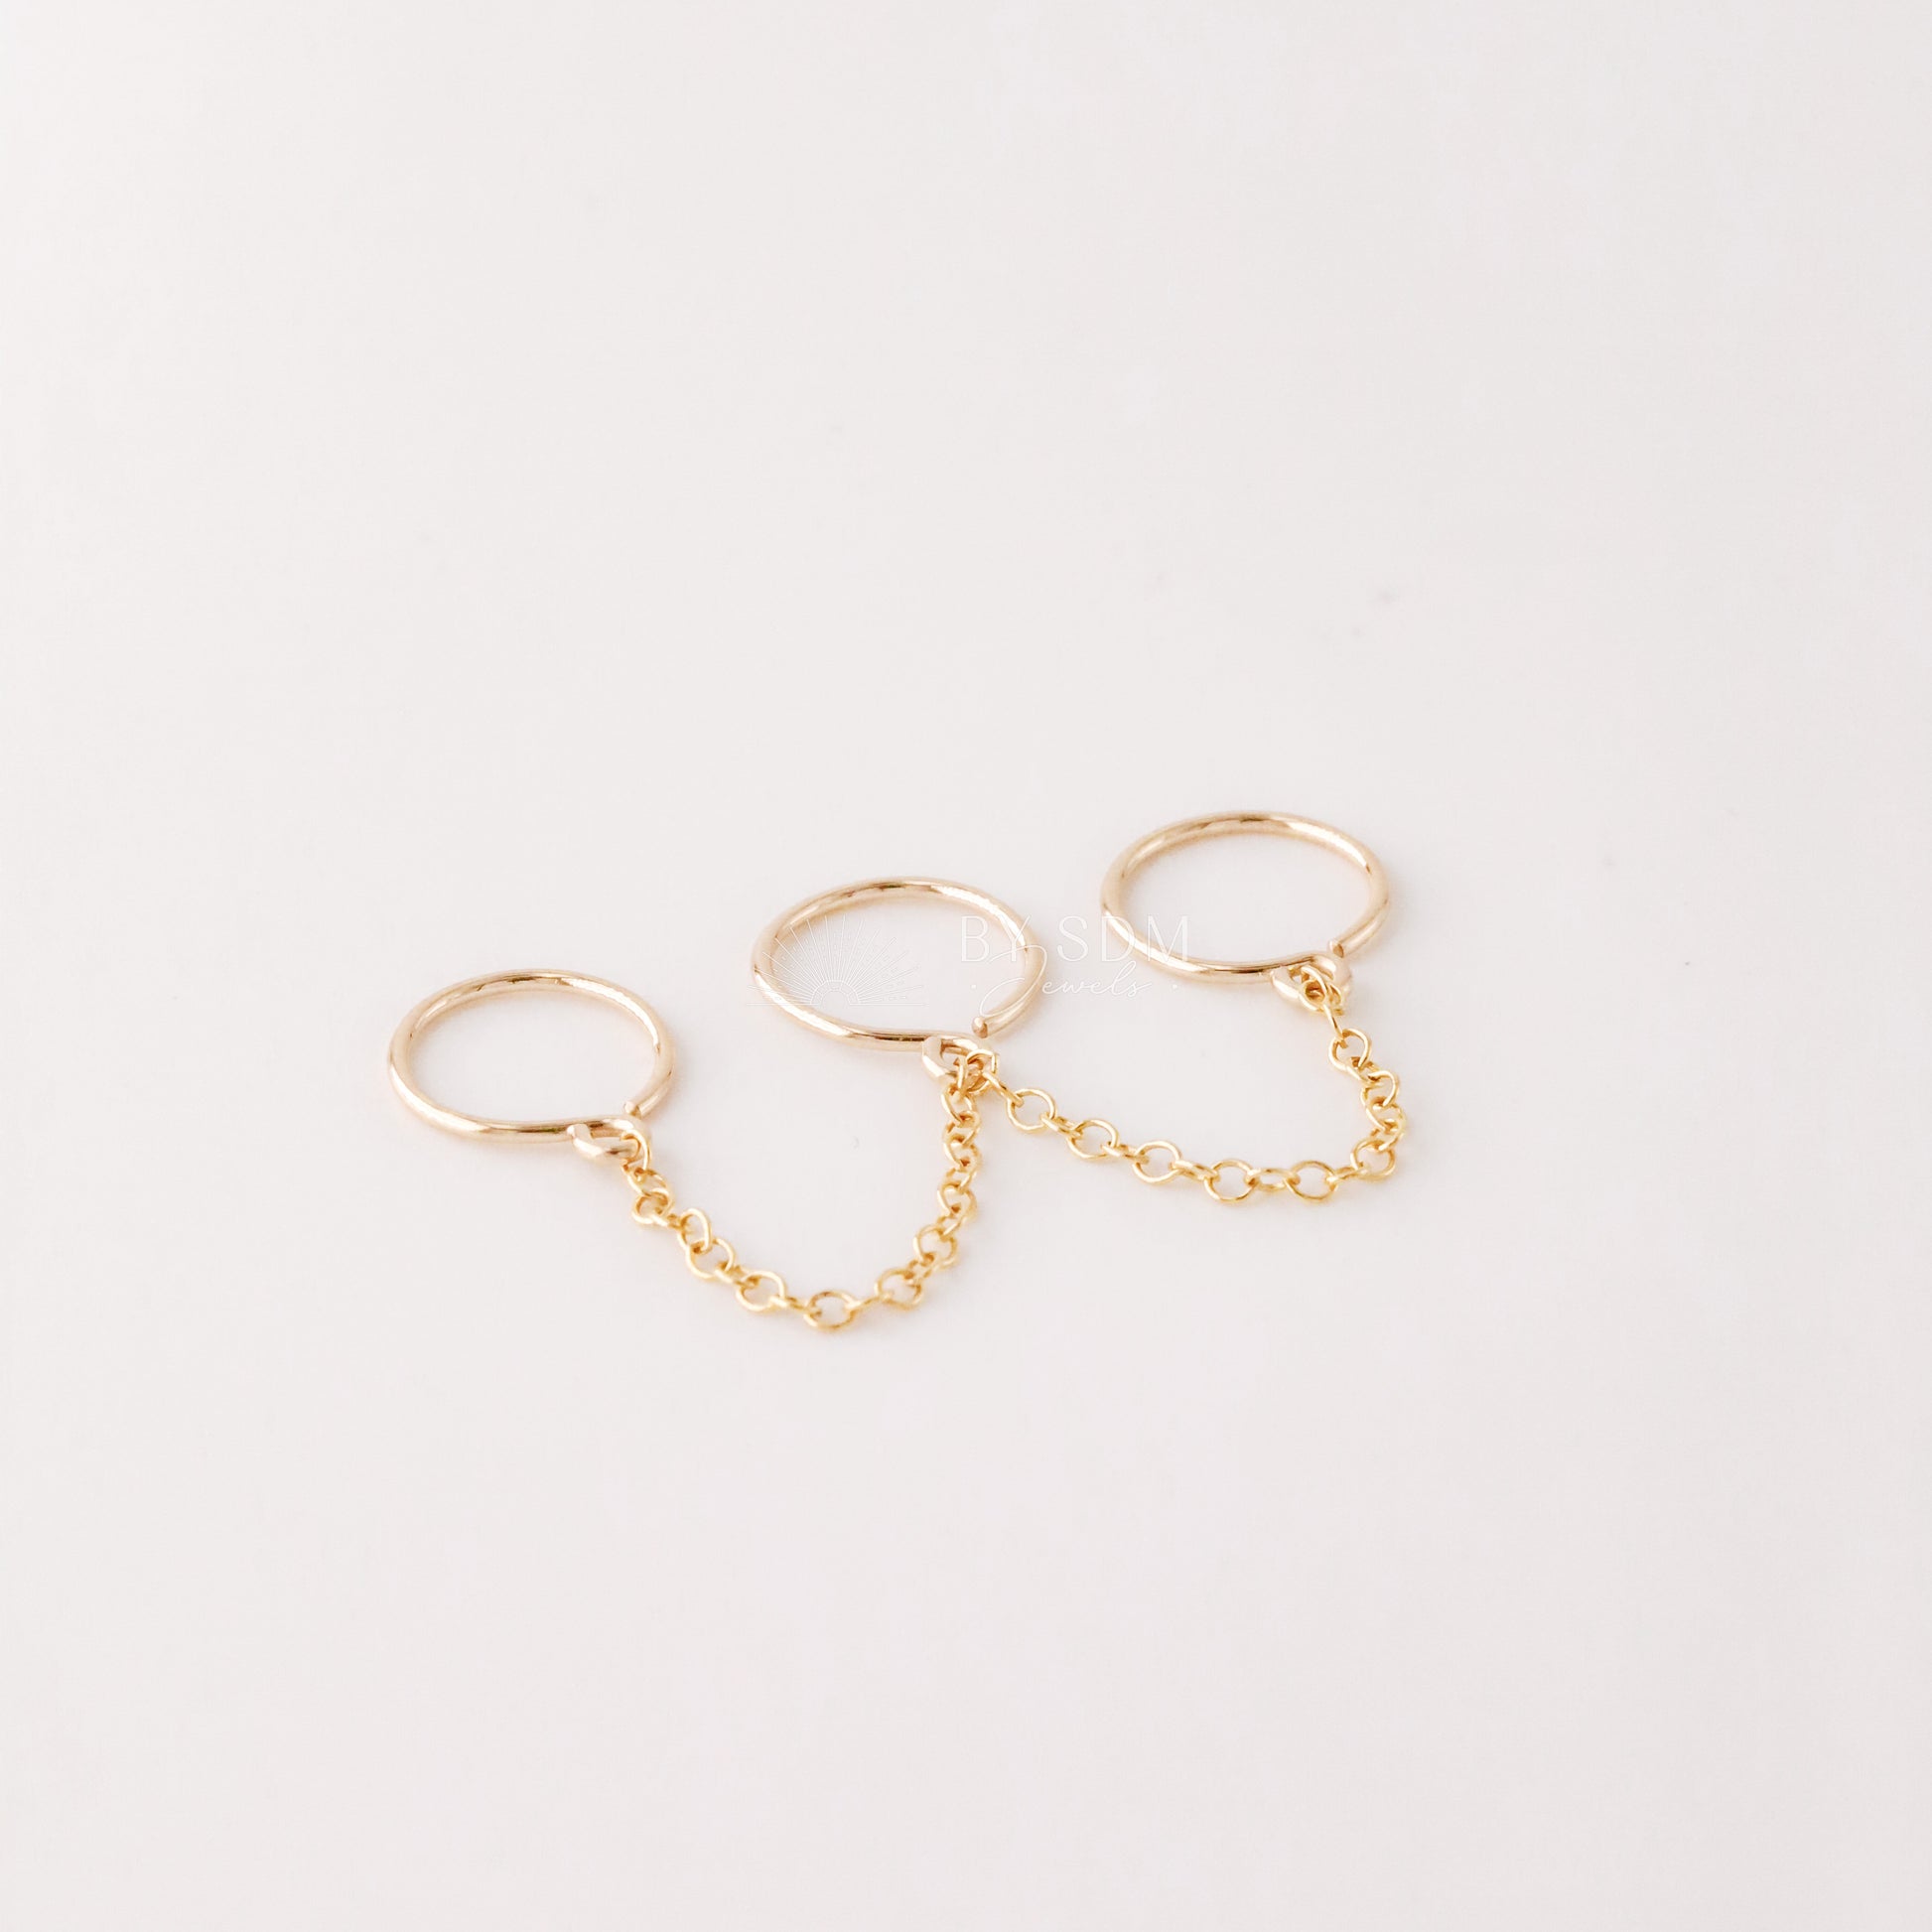 Triple Hoop Earrings With Chain for Three Piercings • Huggies • Gold • Silver • Rose Gold • BYSDMJEWELS